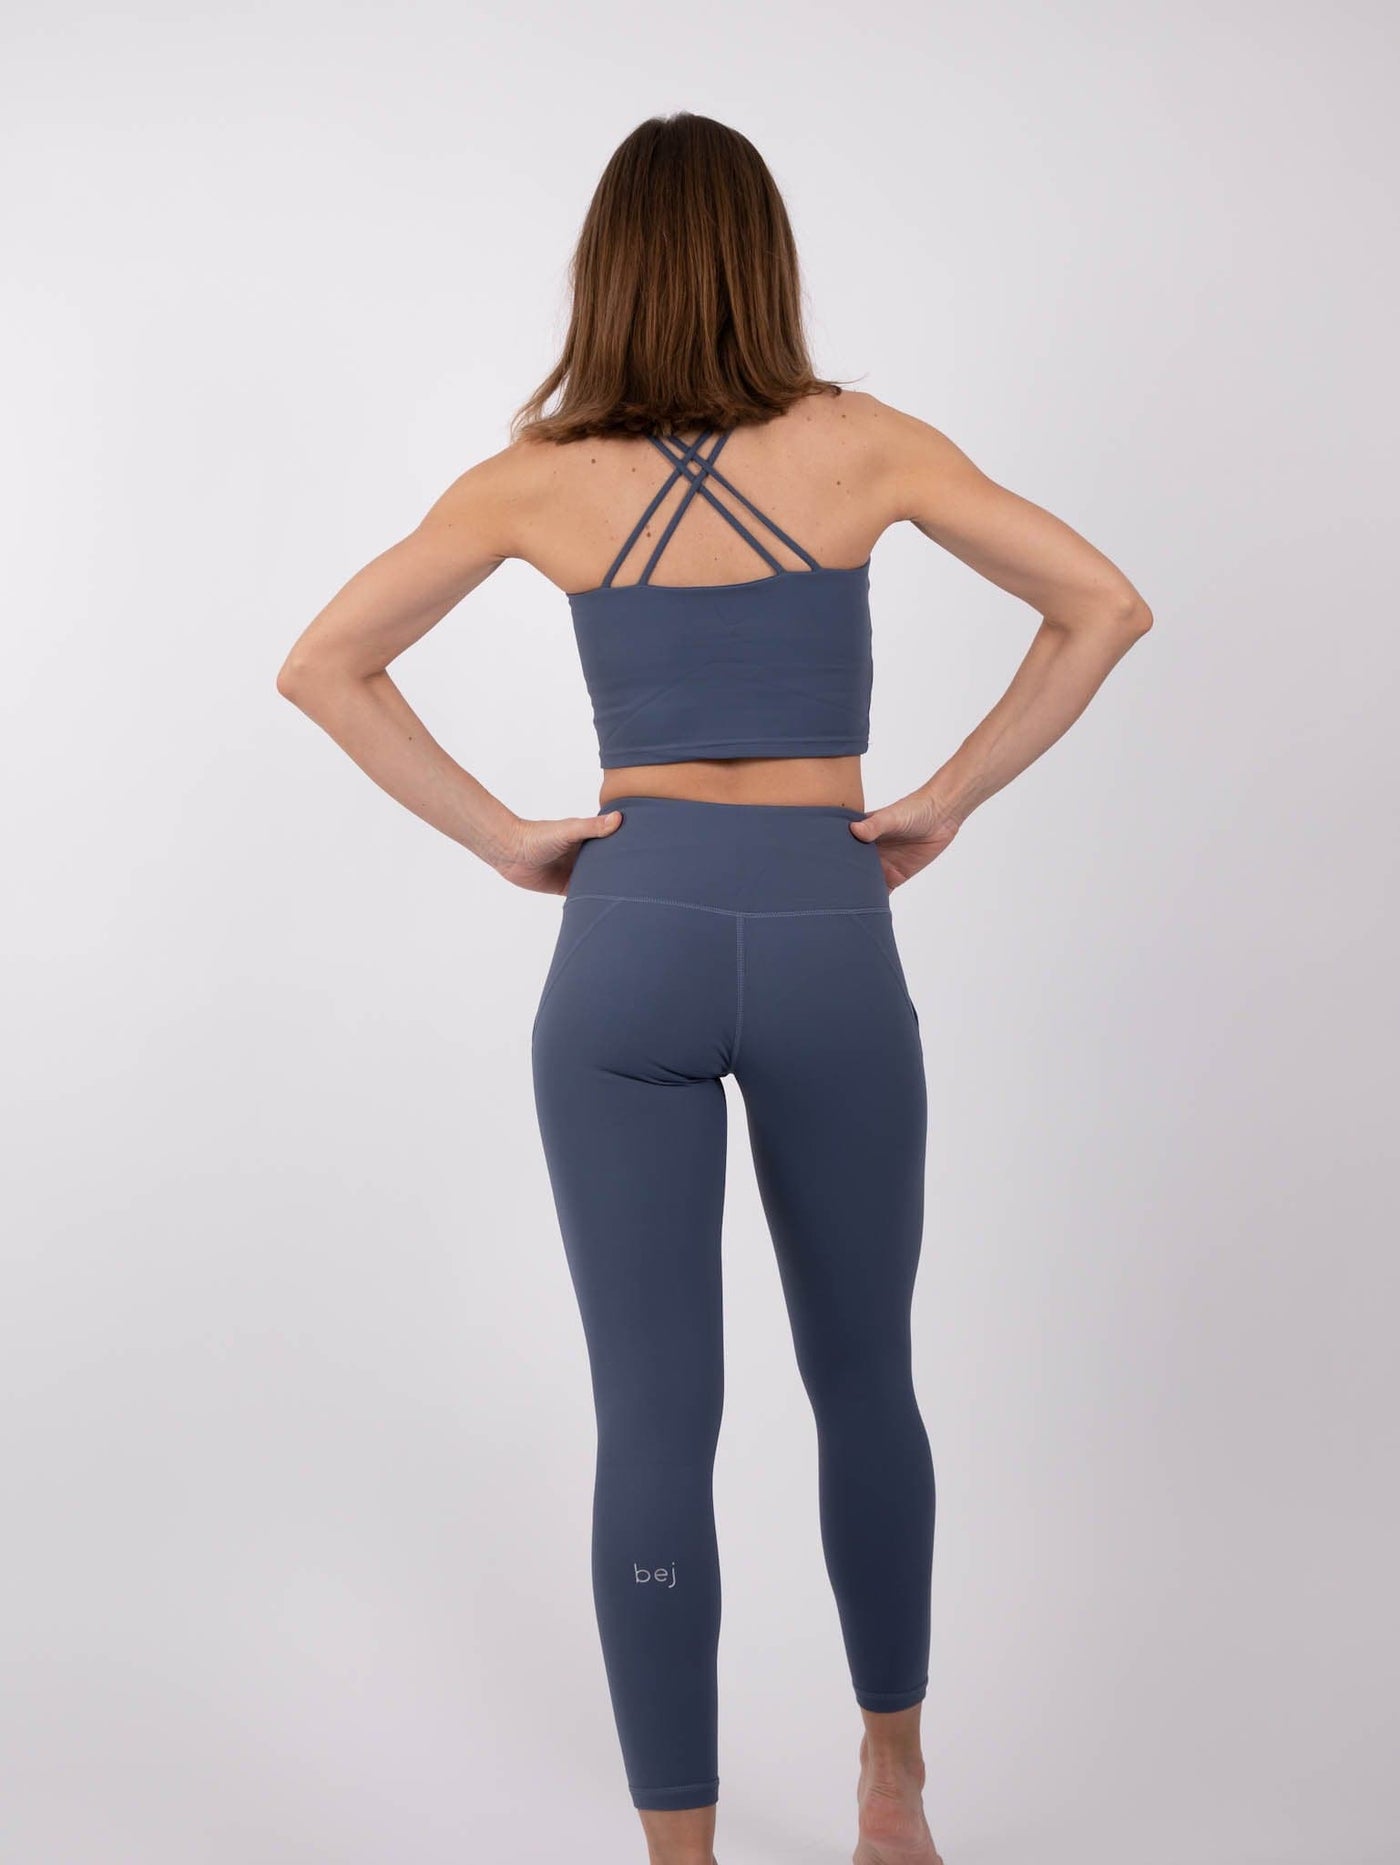 Warm Blue Legging - Shop women's workout apparel online | Leggings, hoodies, Top & bras | bejactive